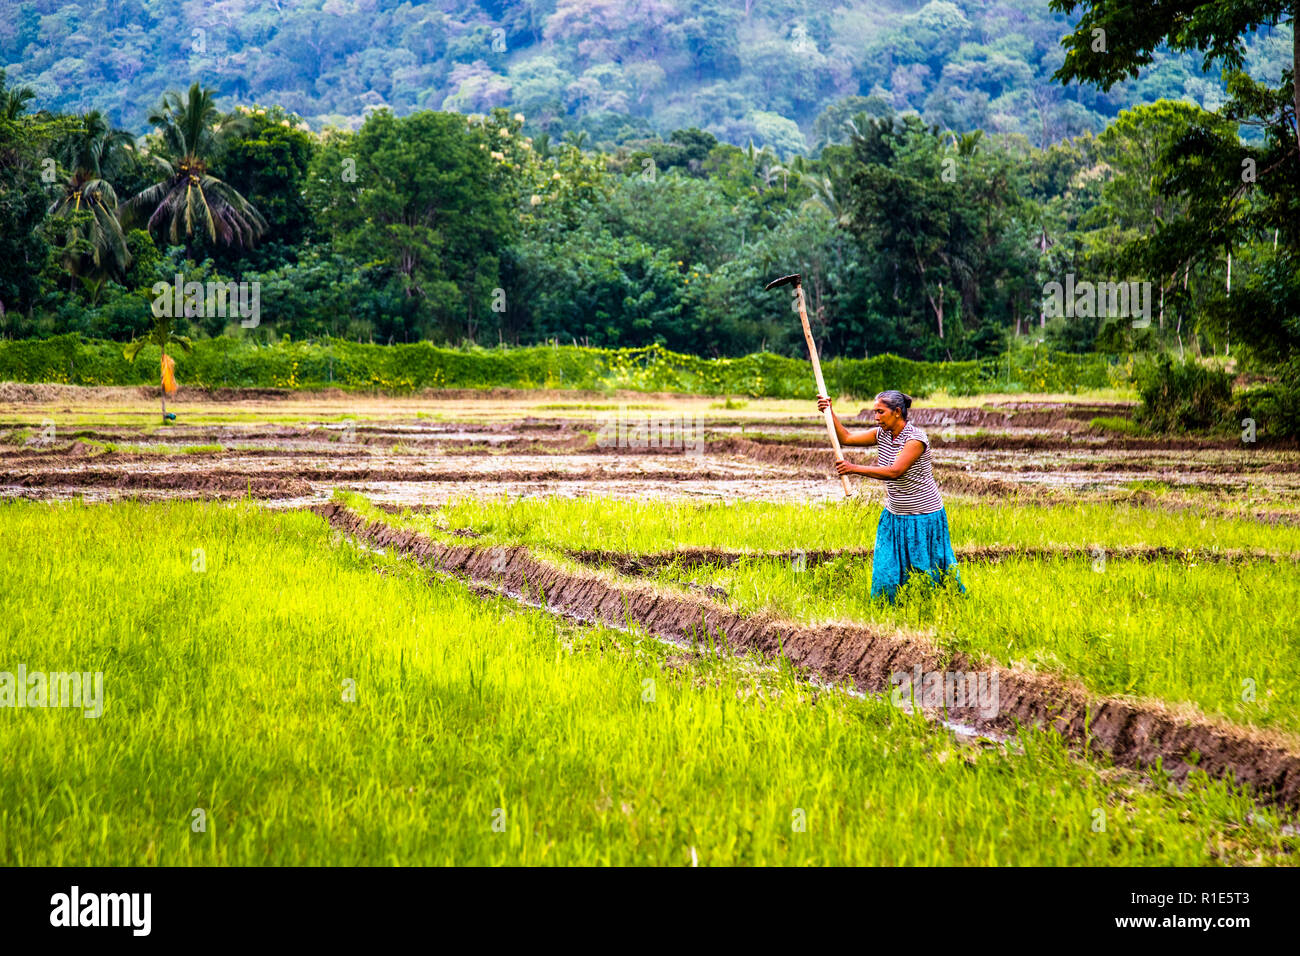 Rice farming in Sri Lanka. Farmer's wife preparing a rice field Stock Photo